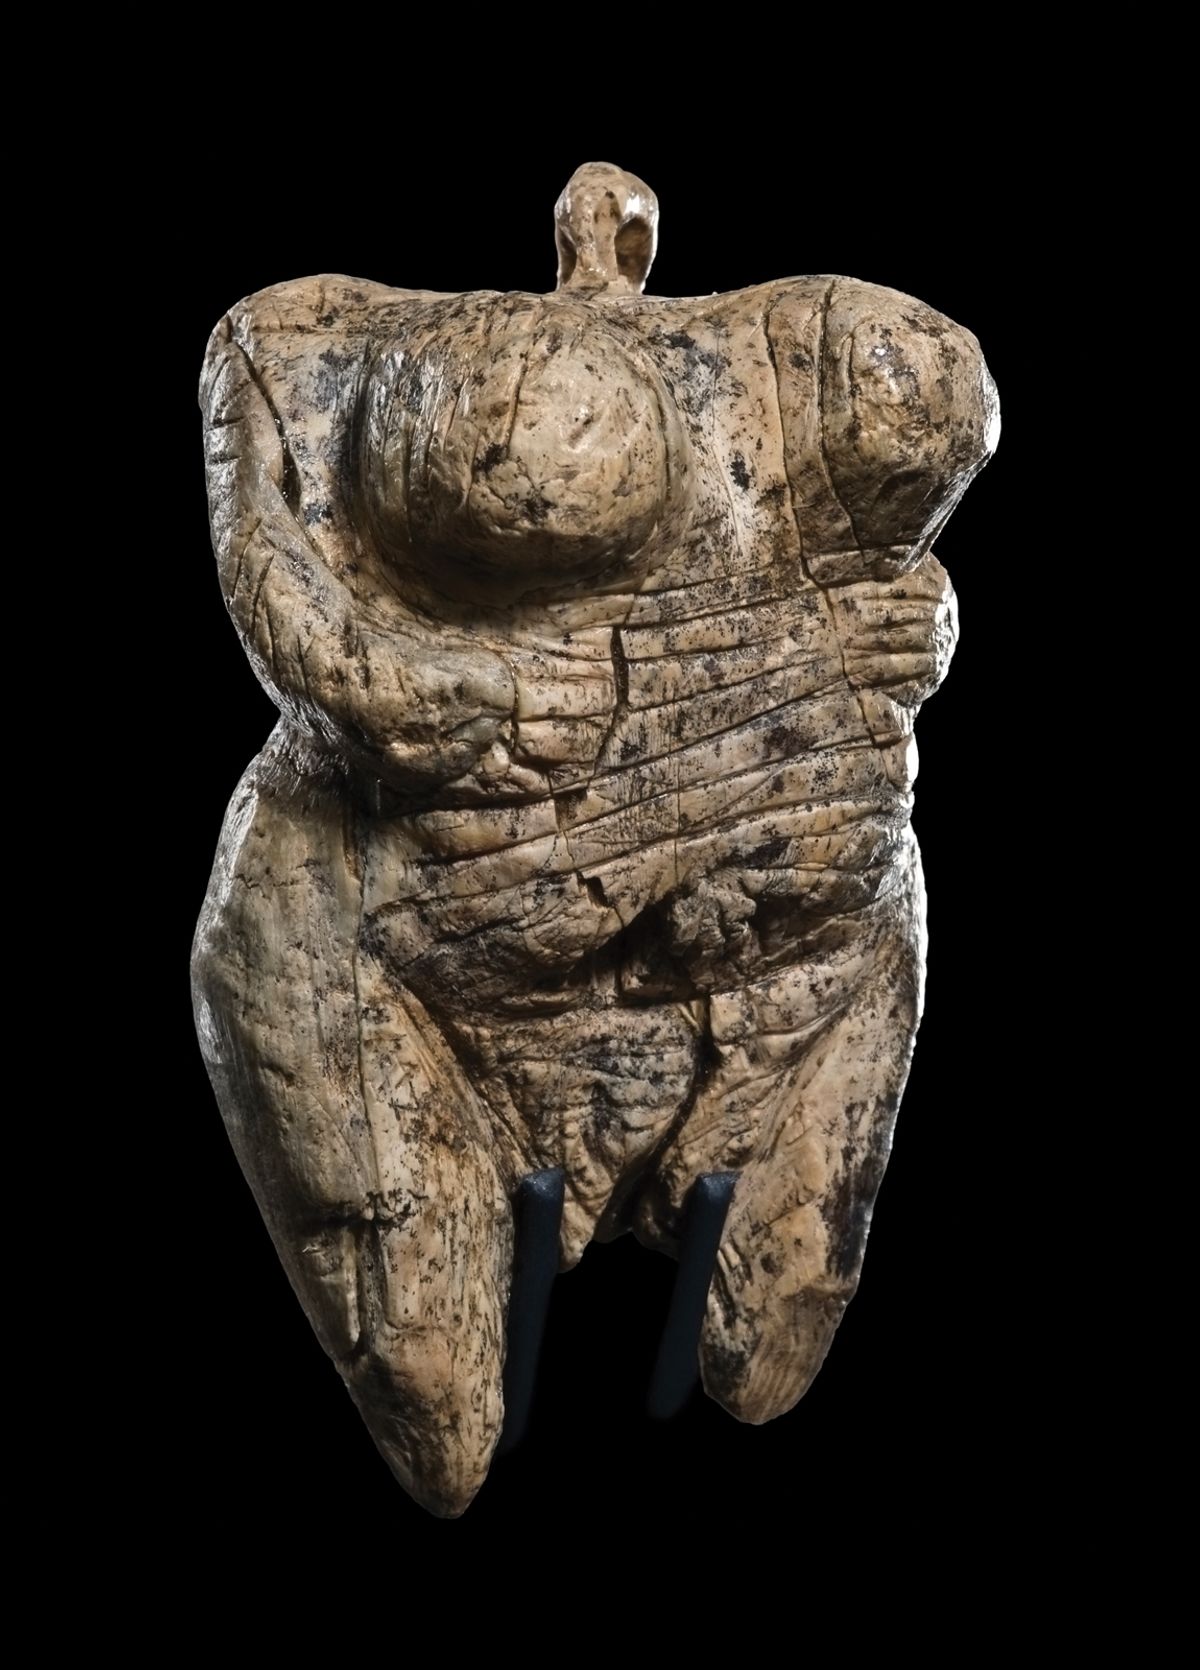 Exhibits include the 35,000-year-old Venus of Hohle Fels made from mammoth ivory © Urgeschichtliches Museum Blaubeuren, Photo: Johannes Wiedmann